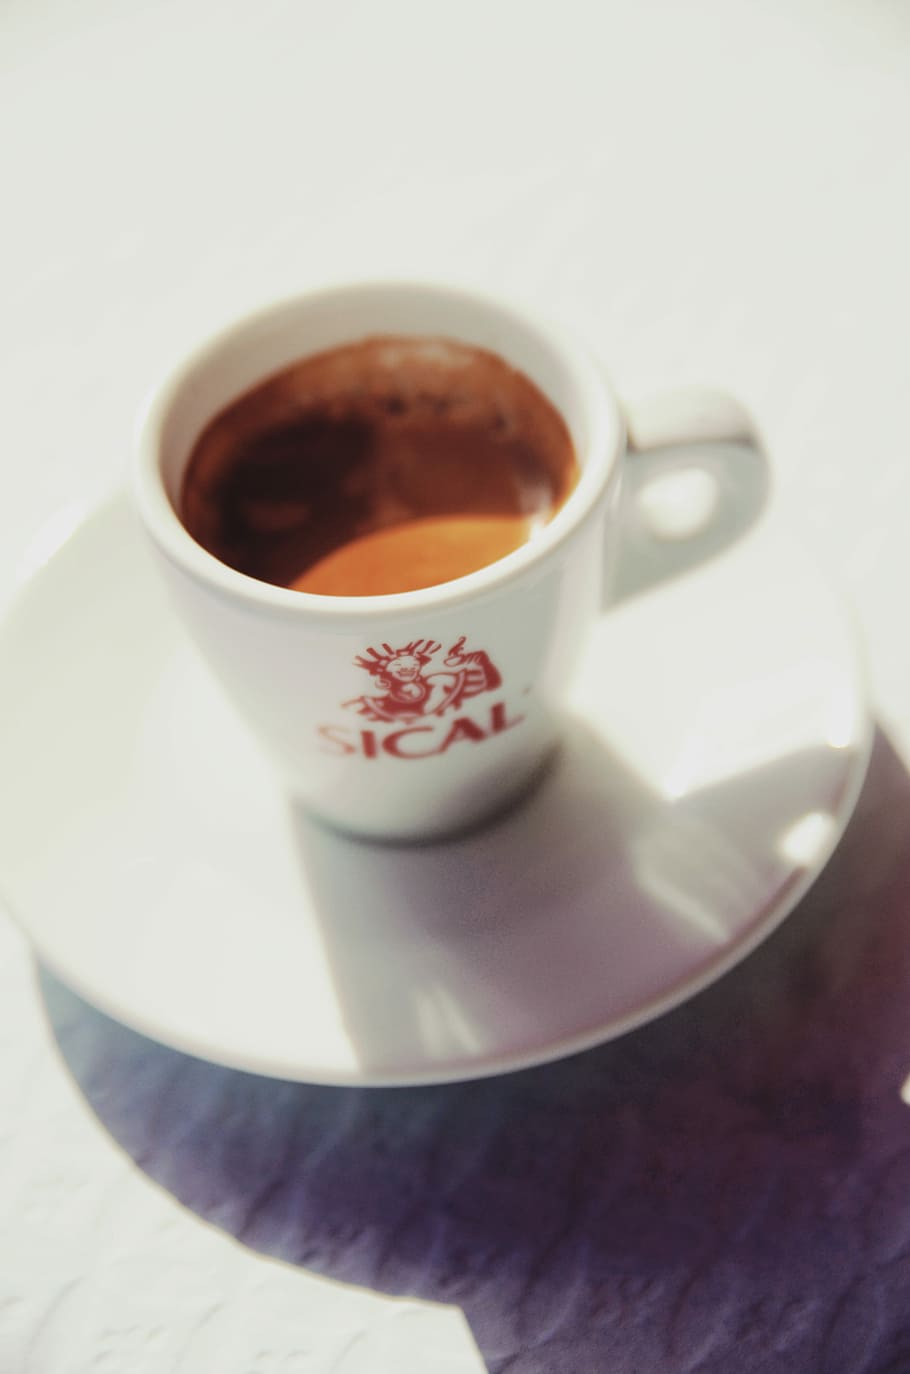 Espresso, close up, coffee, cup, drink, italian, white, heat - Temperature